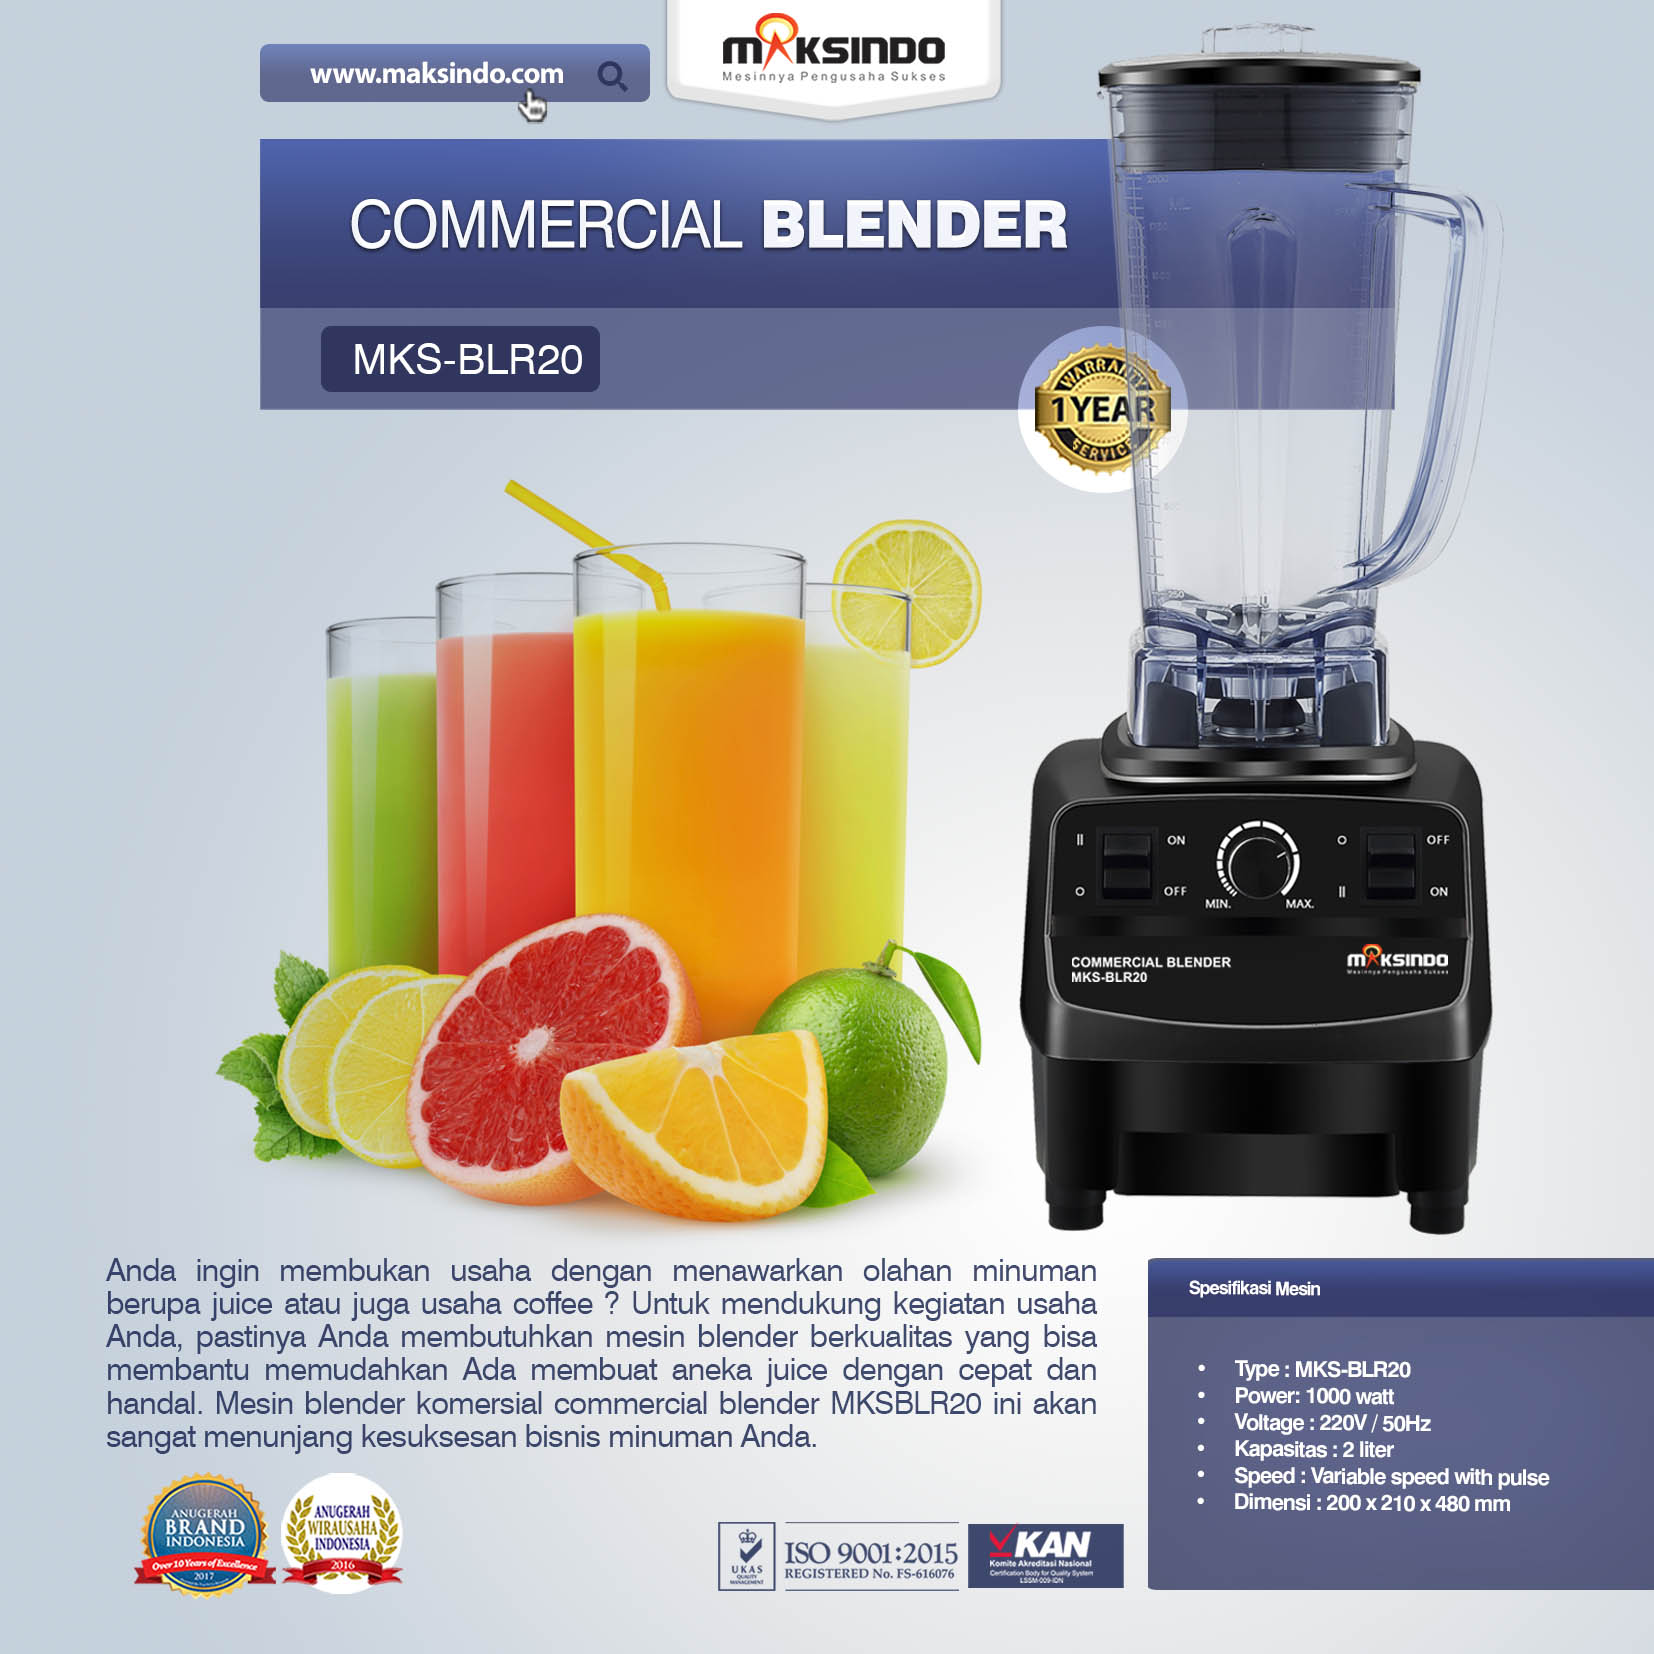 Jual Commercial Blender MKS-BLR20 di Blitar